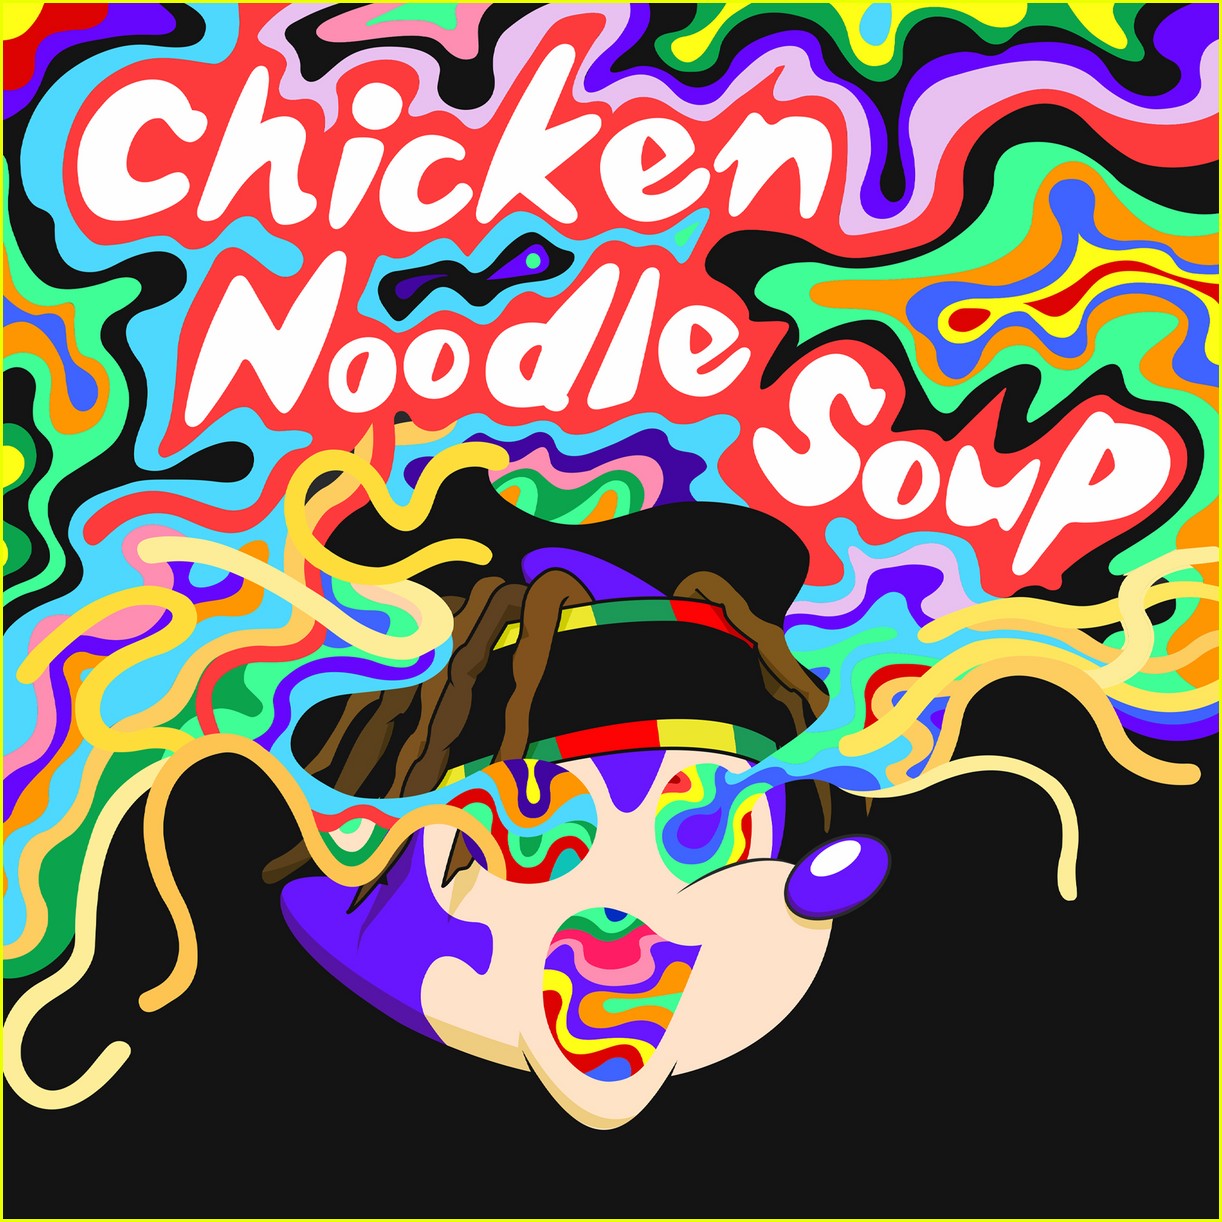 bts j hope becky g chicken noodle soup video dance moves 01